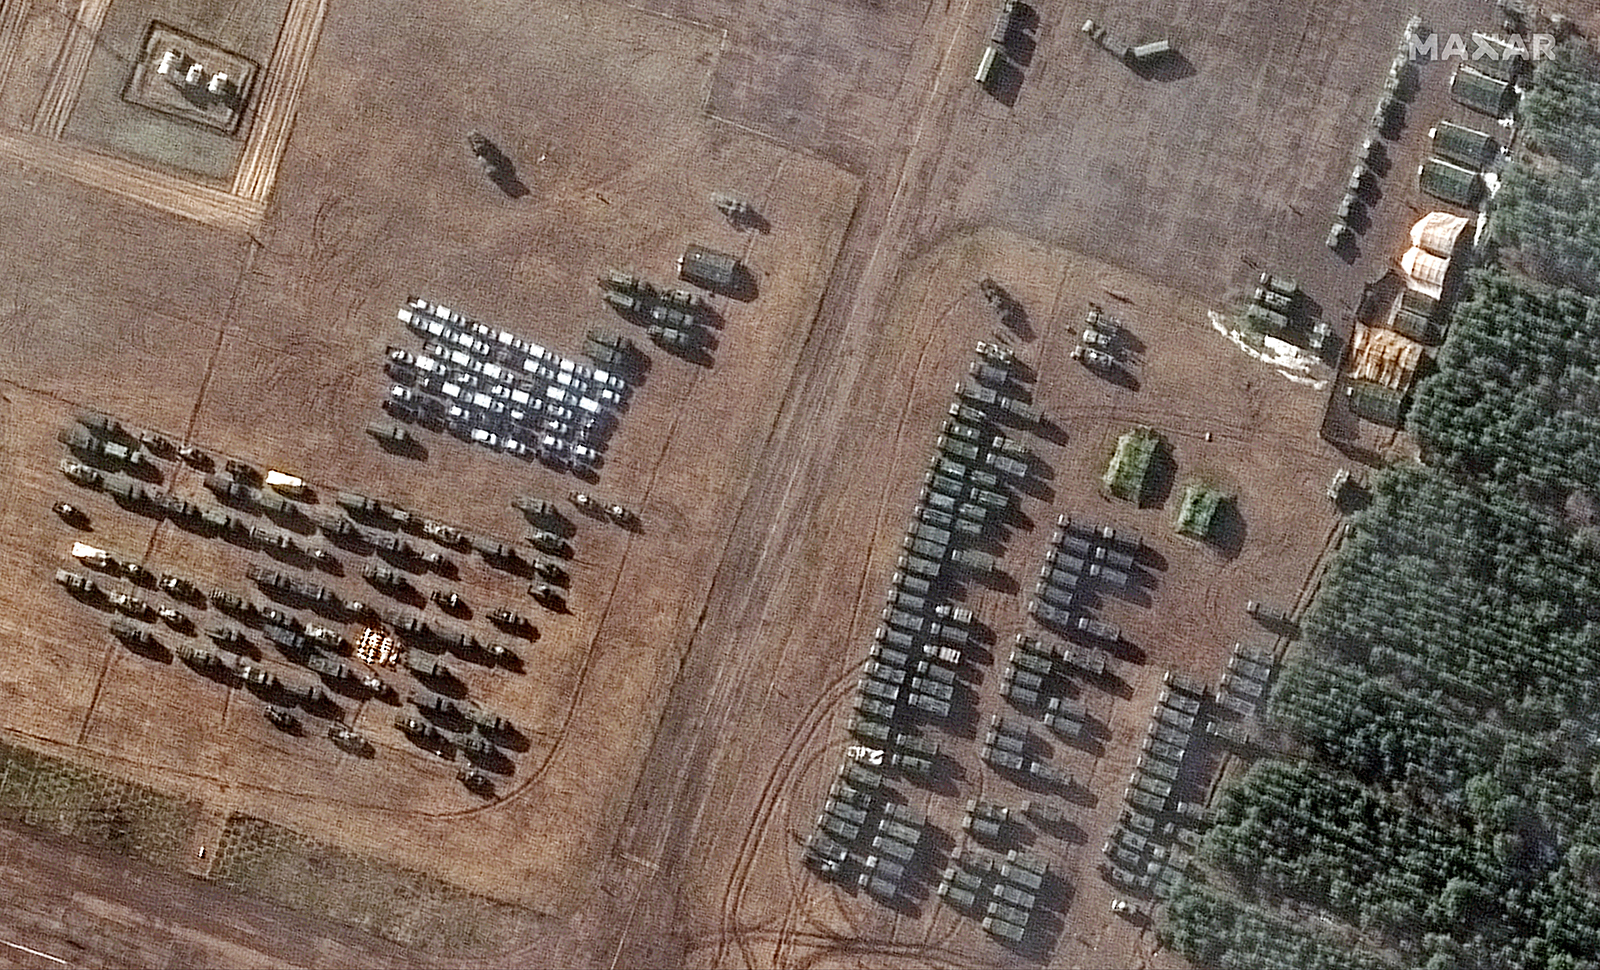 03_close up of assembled vehicles at v d bolshoy bokov airfield_near mazyr belarus_22feb2022_wv3